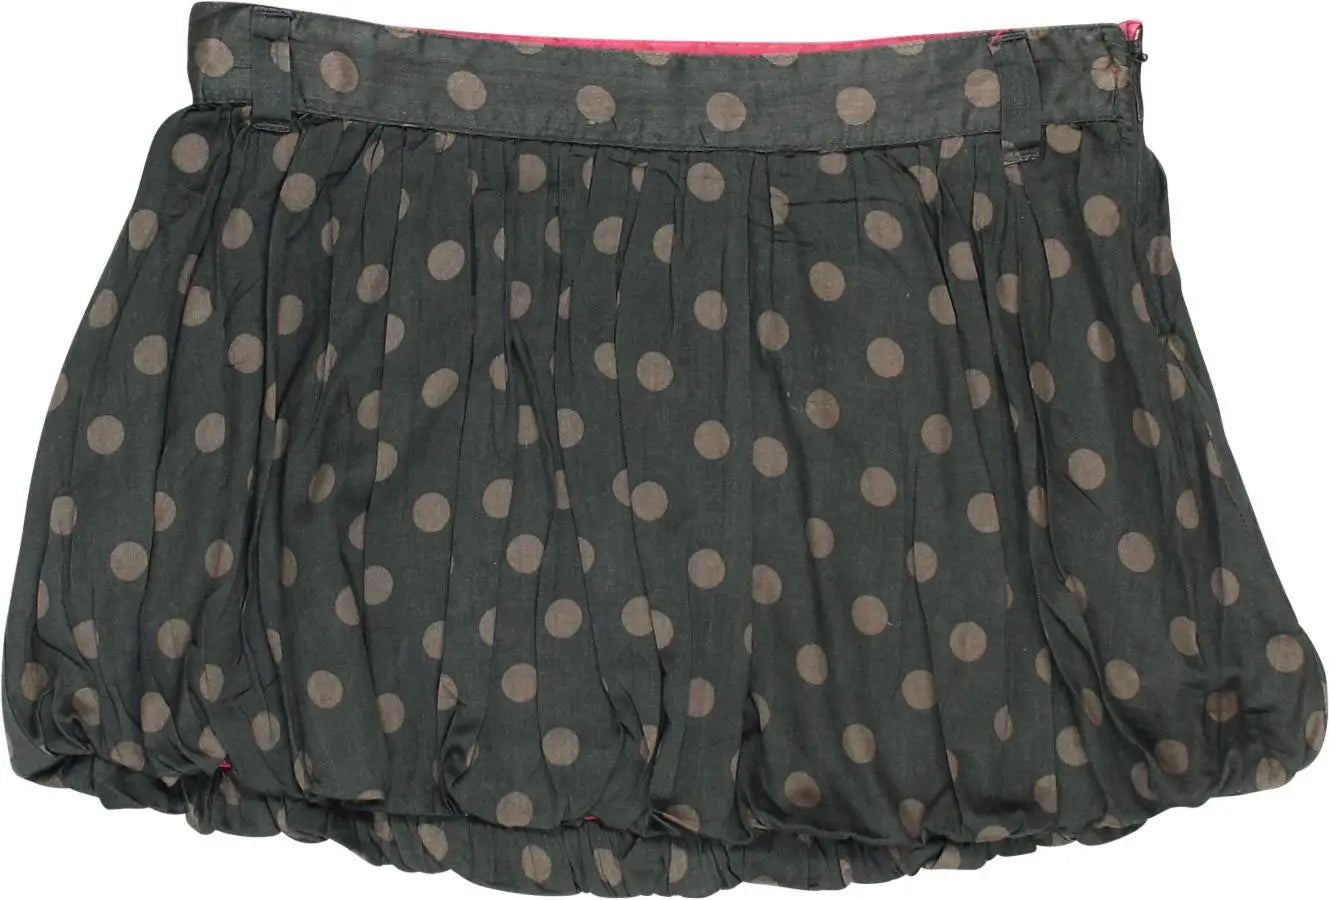 HEMA - Polkadot Skirt- ThriftTale.com - Vintage and second handclothing